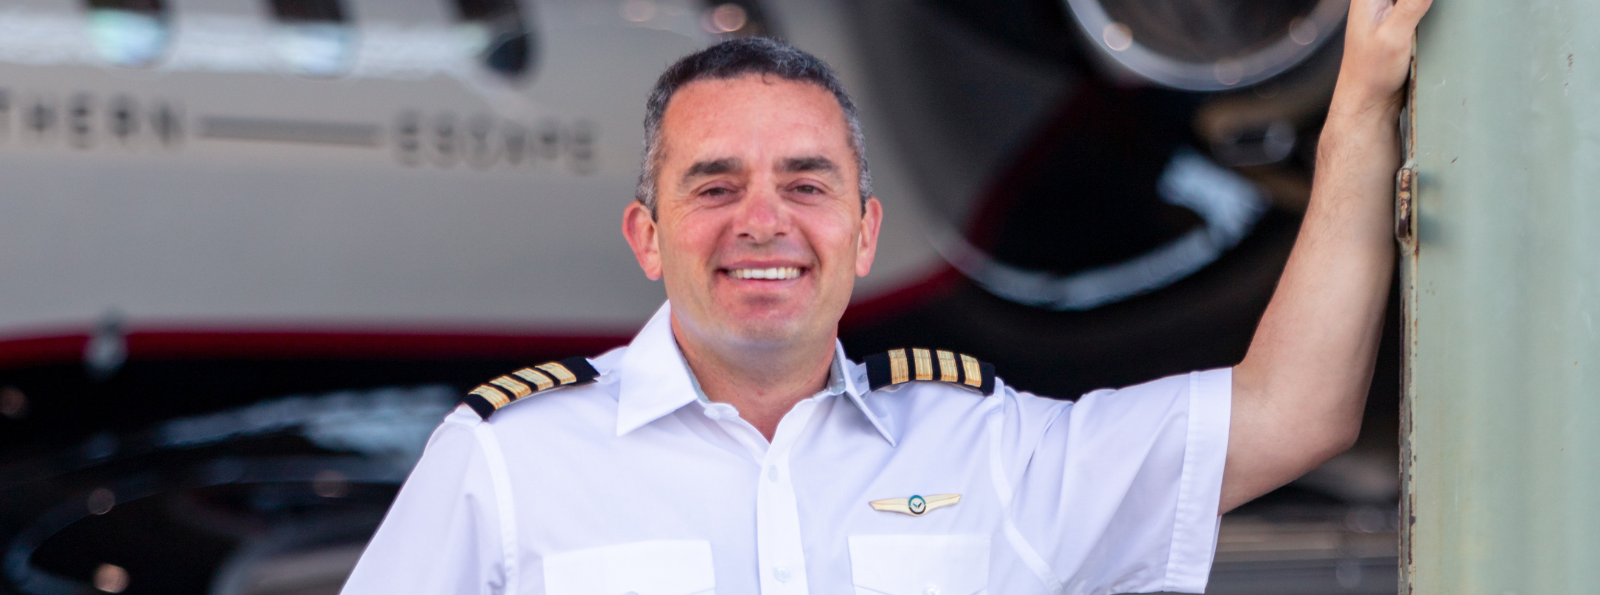 Rick Pegus, Navair CEO and Chief Pilot (Source: Supplied)